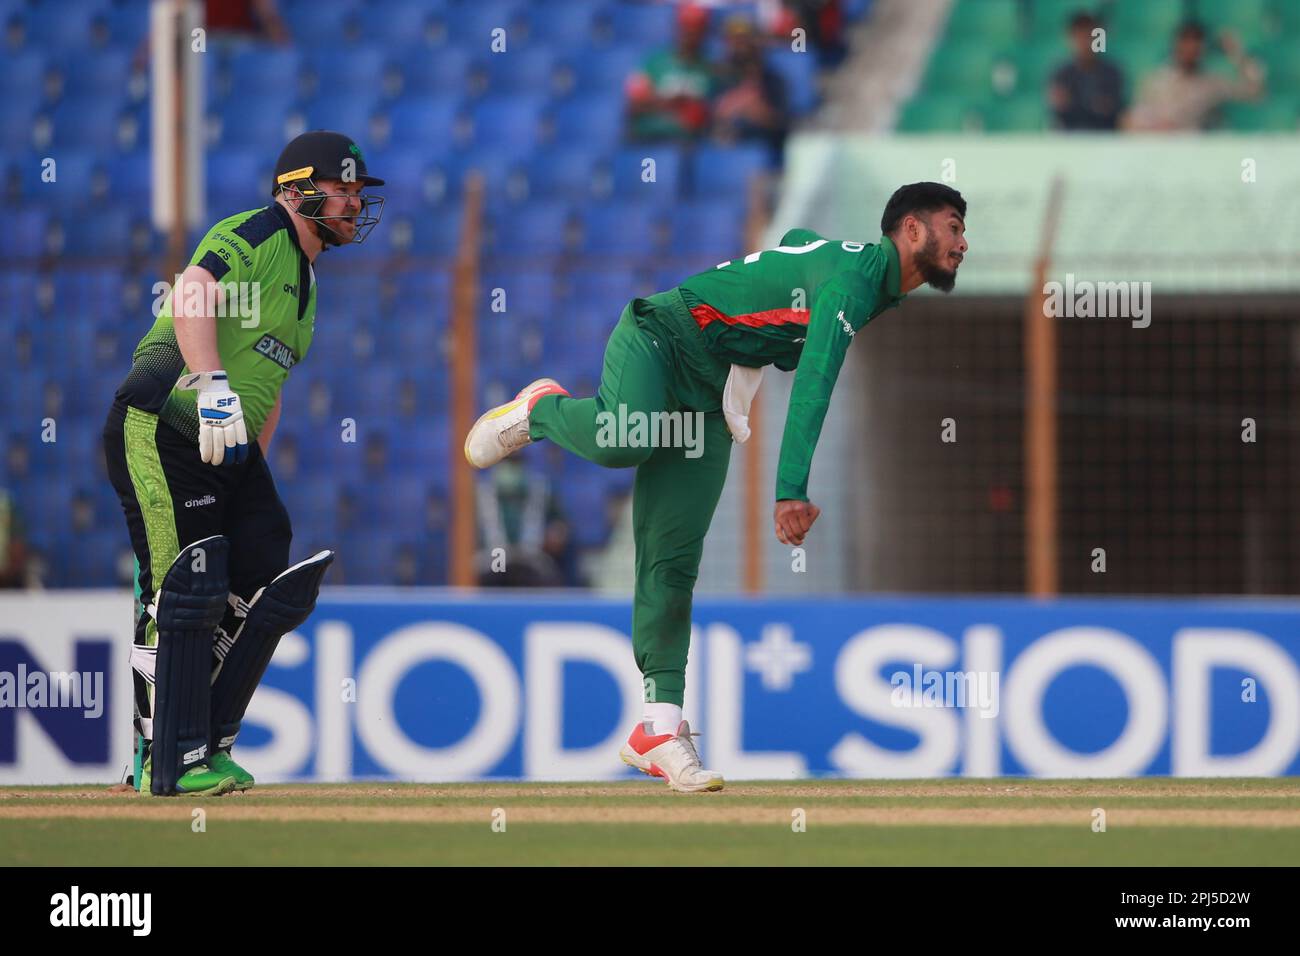 Debütantin Rishad Hossain Bowl während des dritten T20I-Spiels Bangladesch-Irland im Zahur Ahmed Chowdhury Stadiu, Sagorika, Chattogram, Bangladesch. bangla Stockfoto